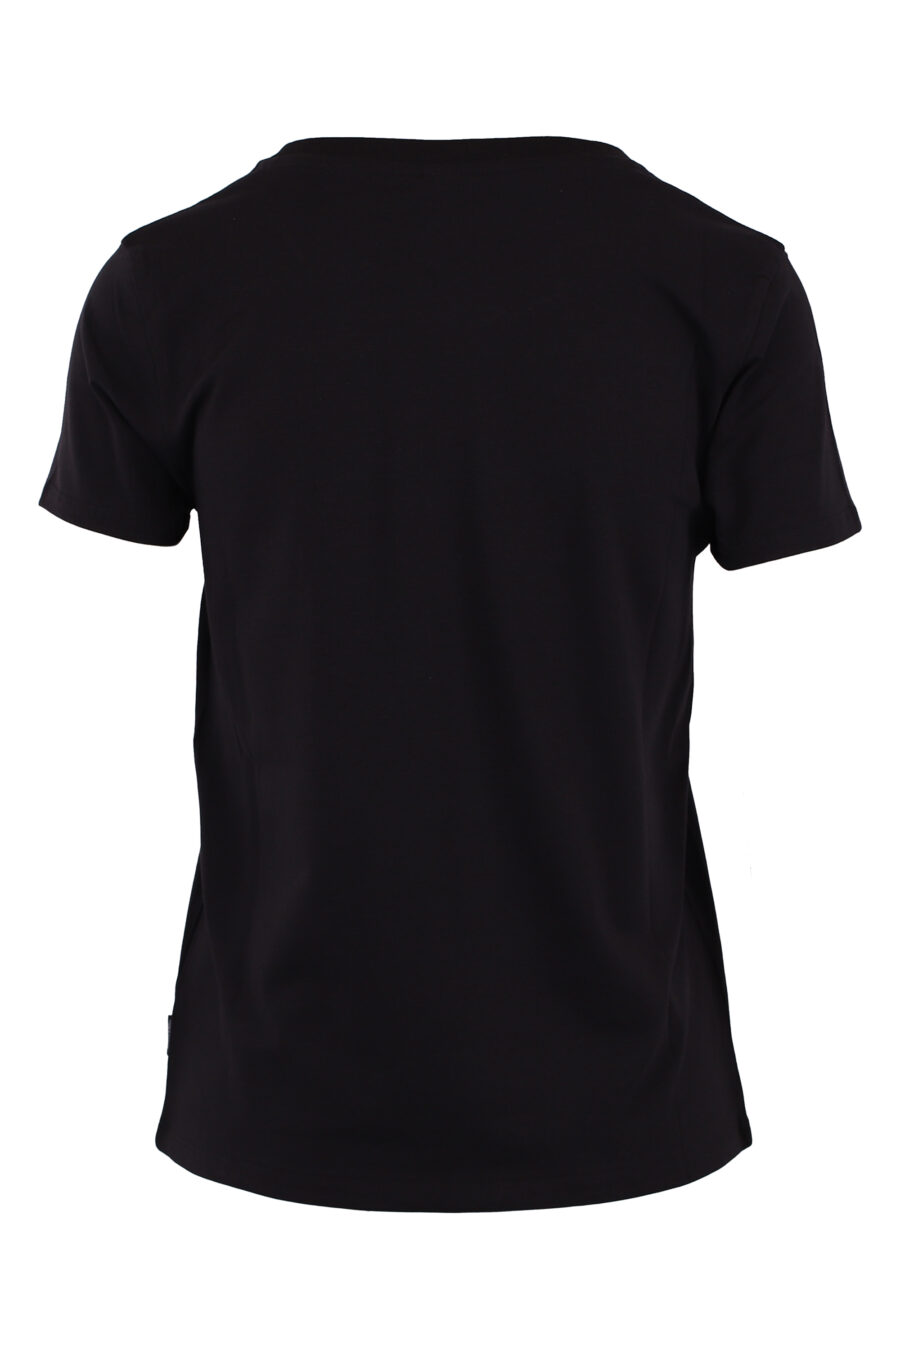 Camiseta negra con logo oso pequeño - IMG 6203